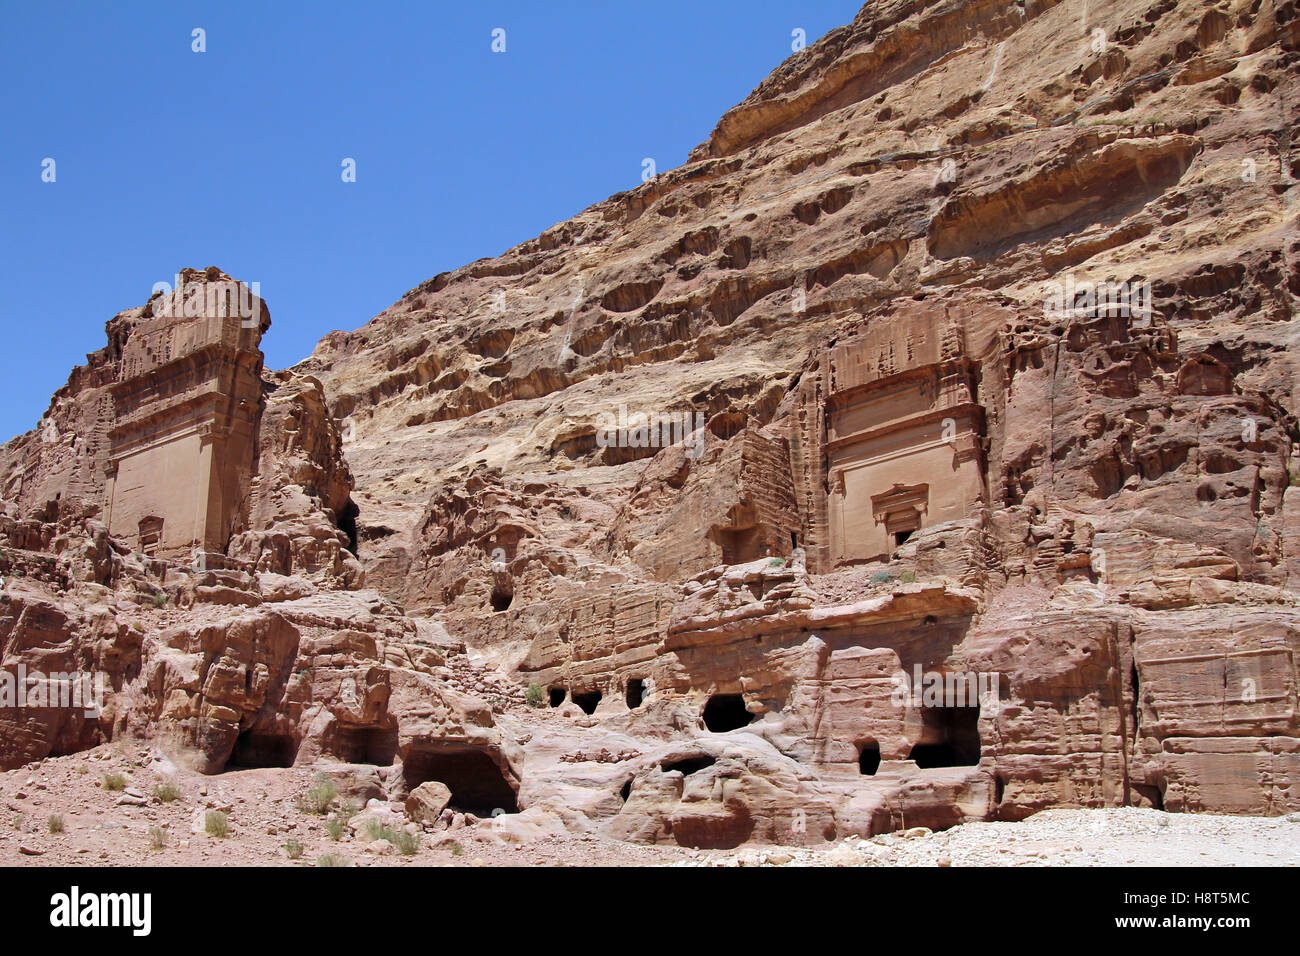 City made in rocks, Petra, Jordan Stock Photo - Alamy